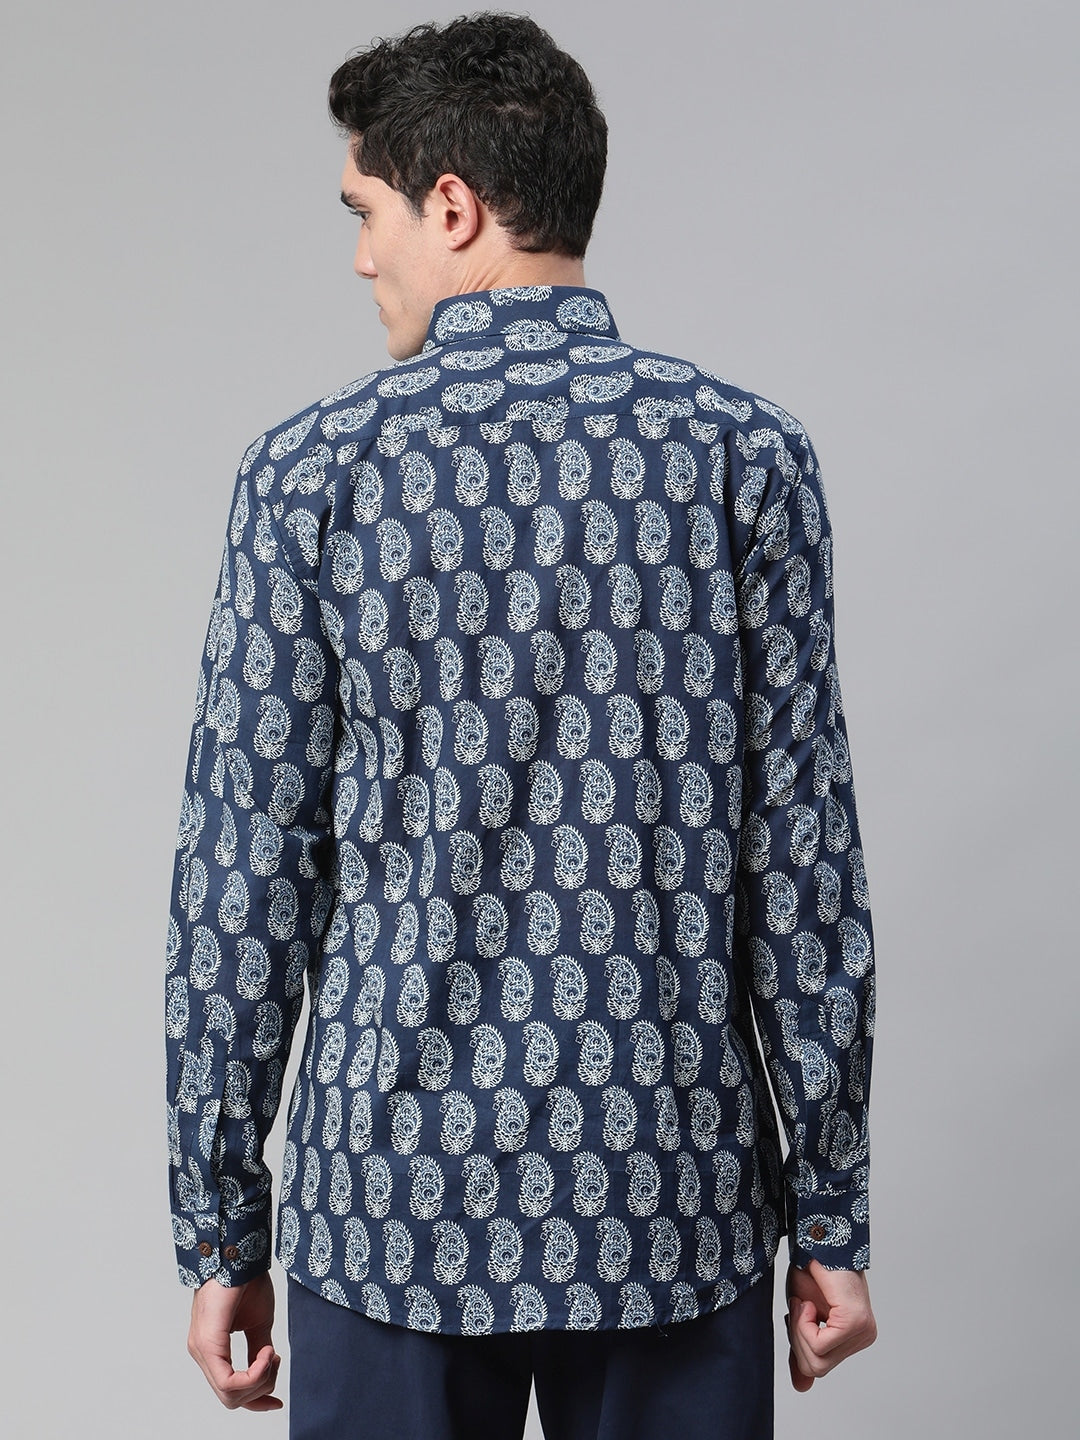 Millennial Blue Comfort Printed Casual Shirt